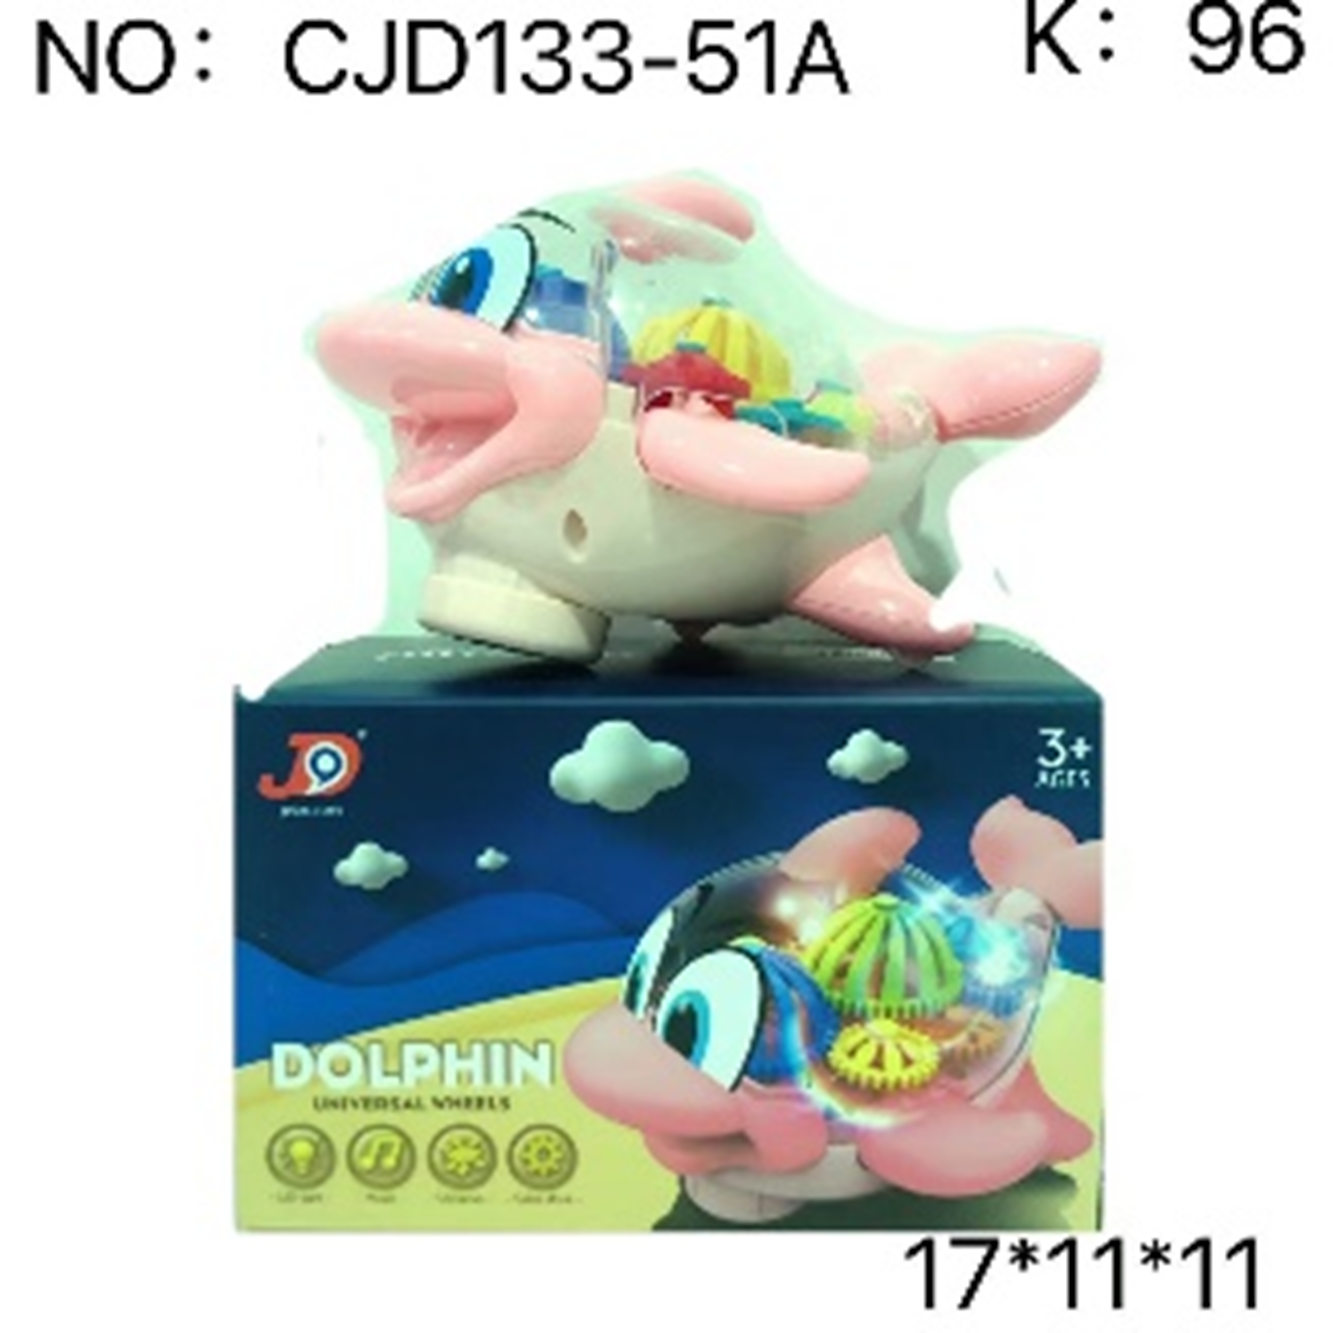 Дельфин CJD133-51A на батарейках в коробке - Чебоксары 